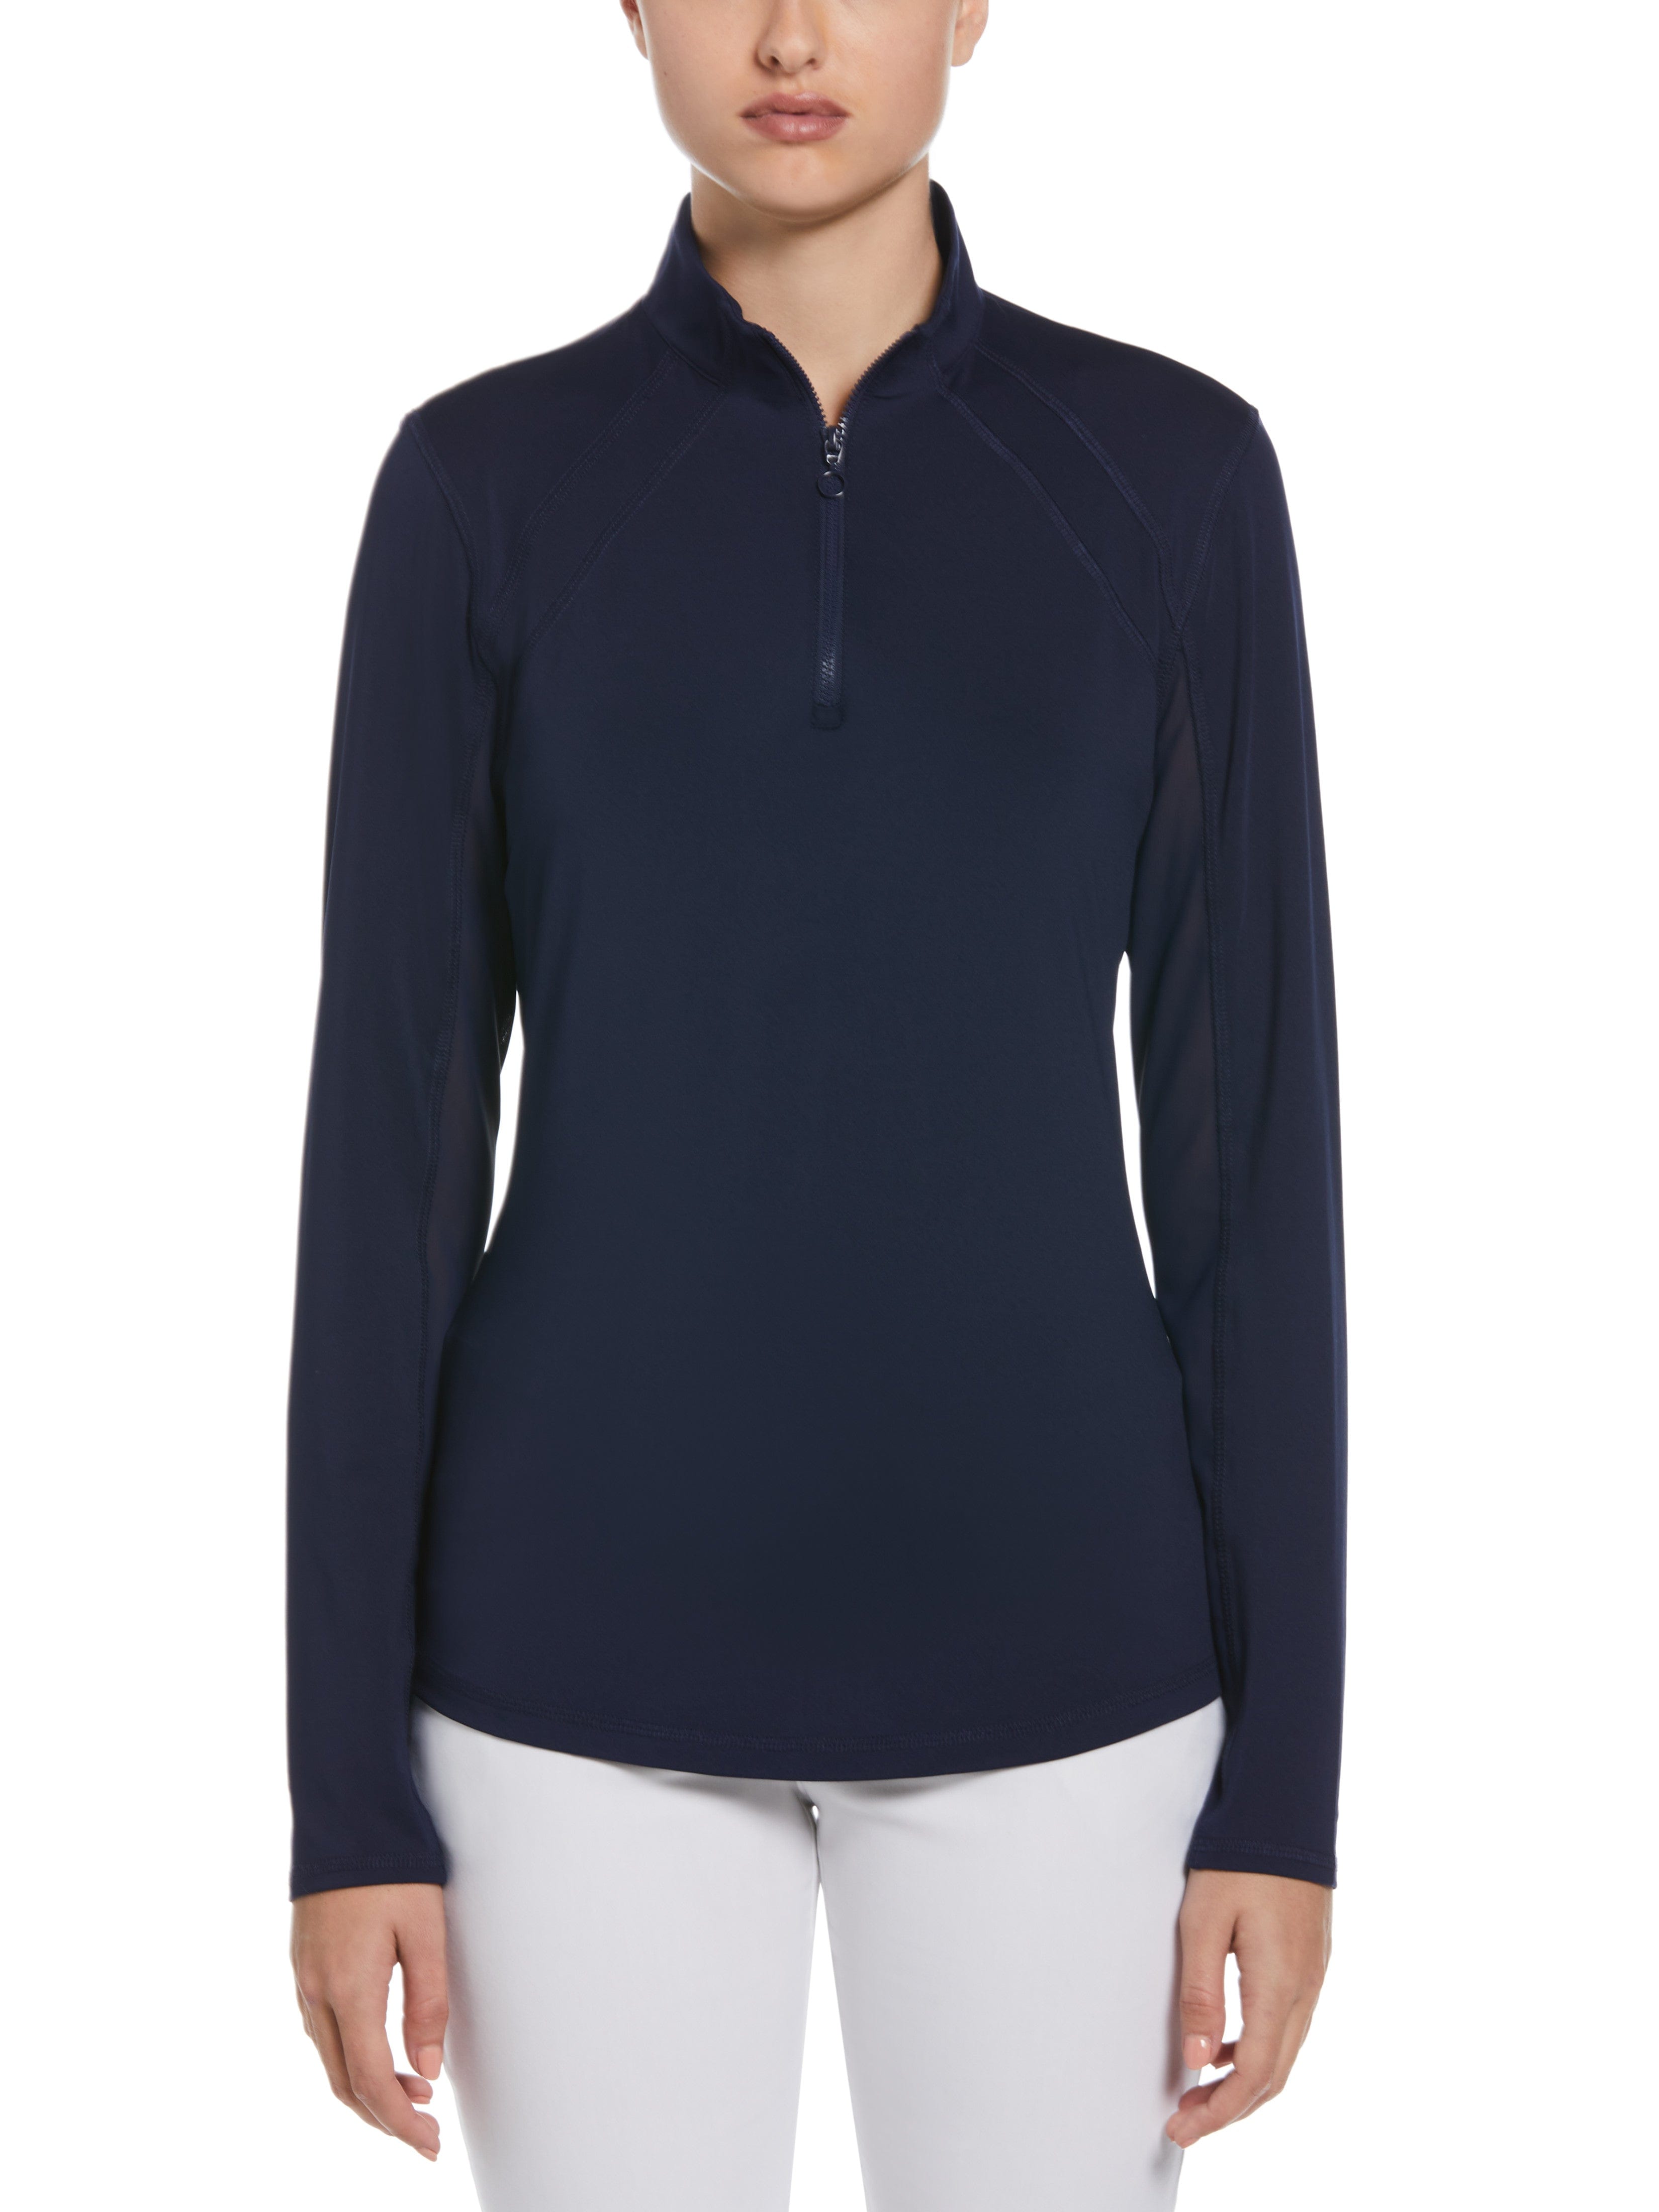 PGA TOUR Apparel Womens Sun Protection Golf Shirt w/ Mesh Panels, Size Large, Navy Blue, Polyester/Spandex | Golf Apparel Shop